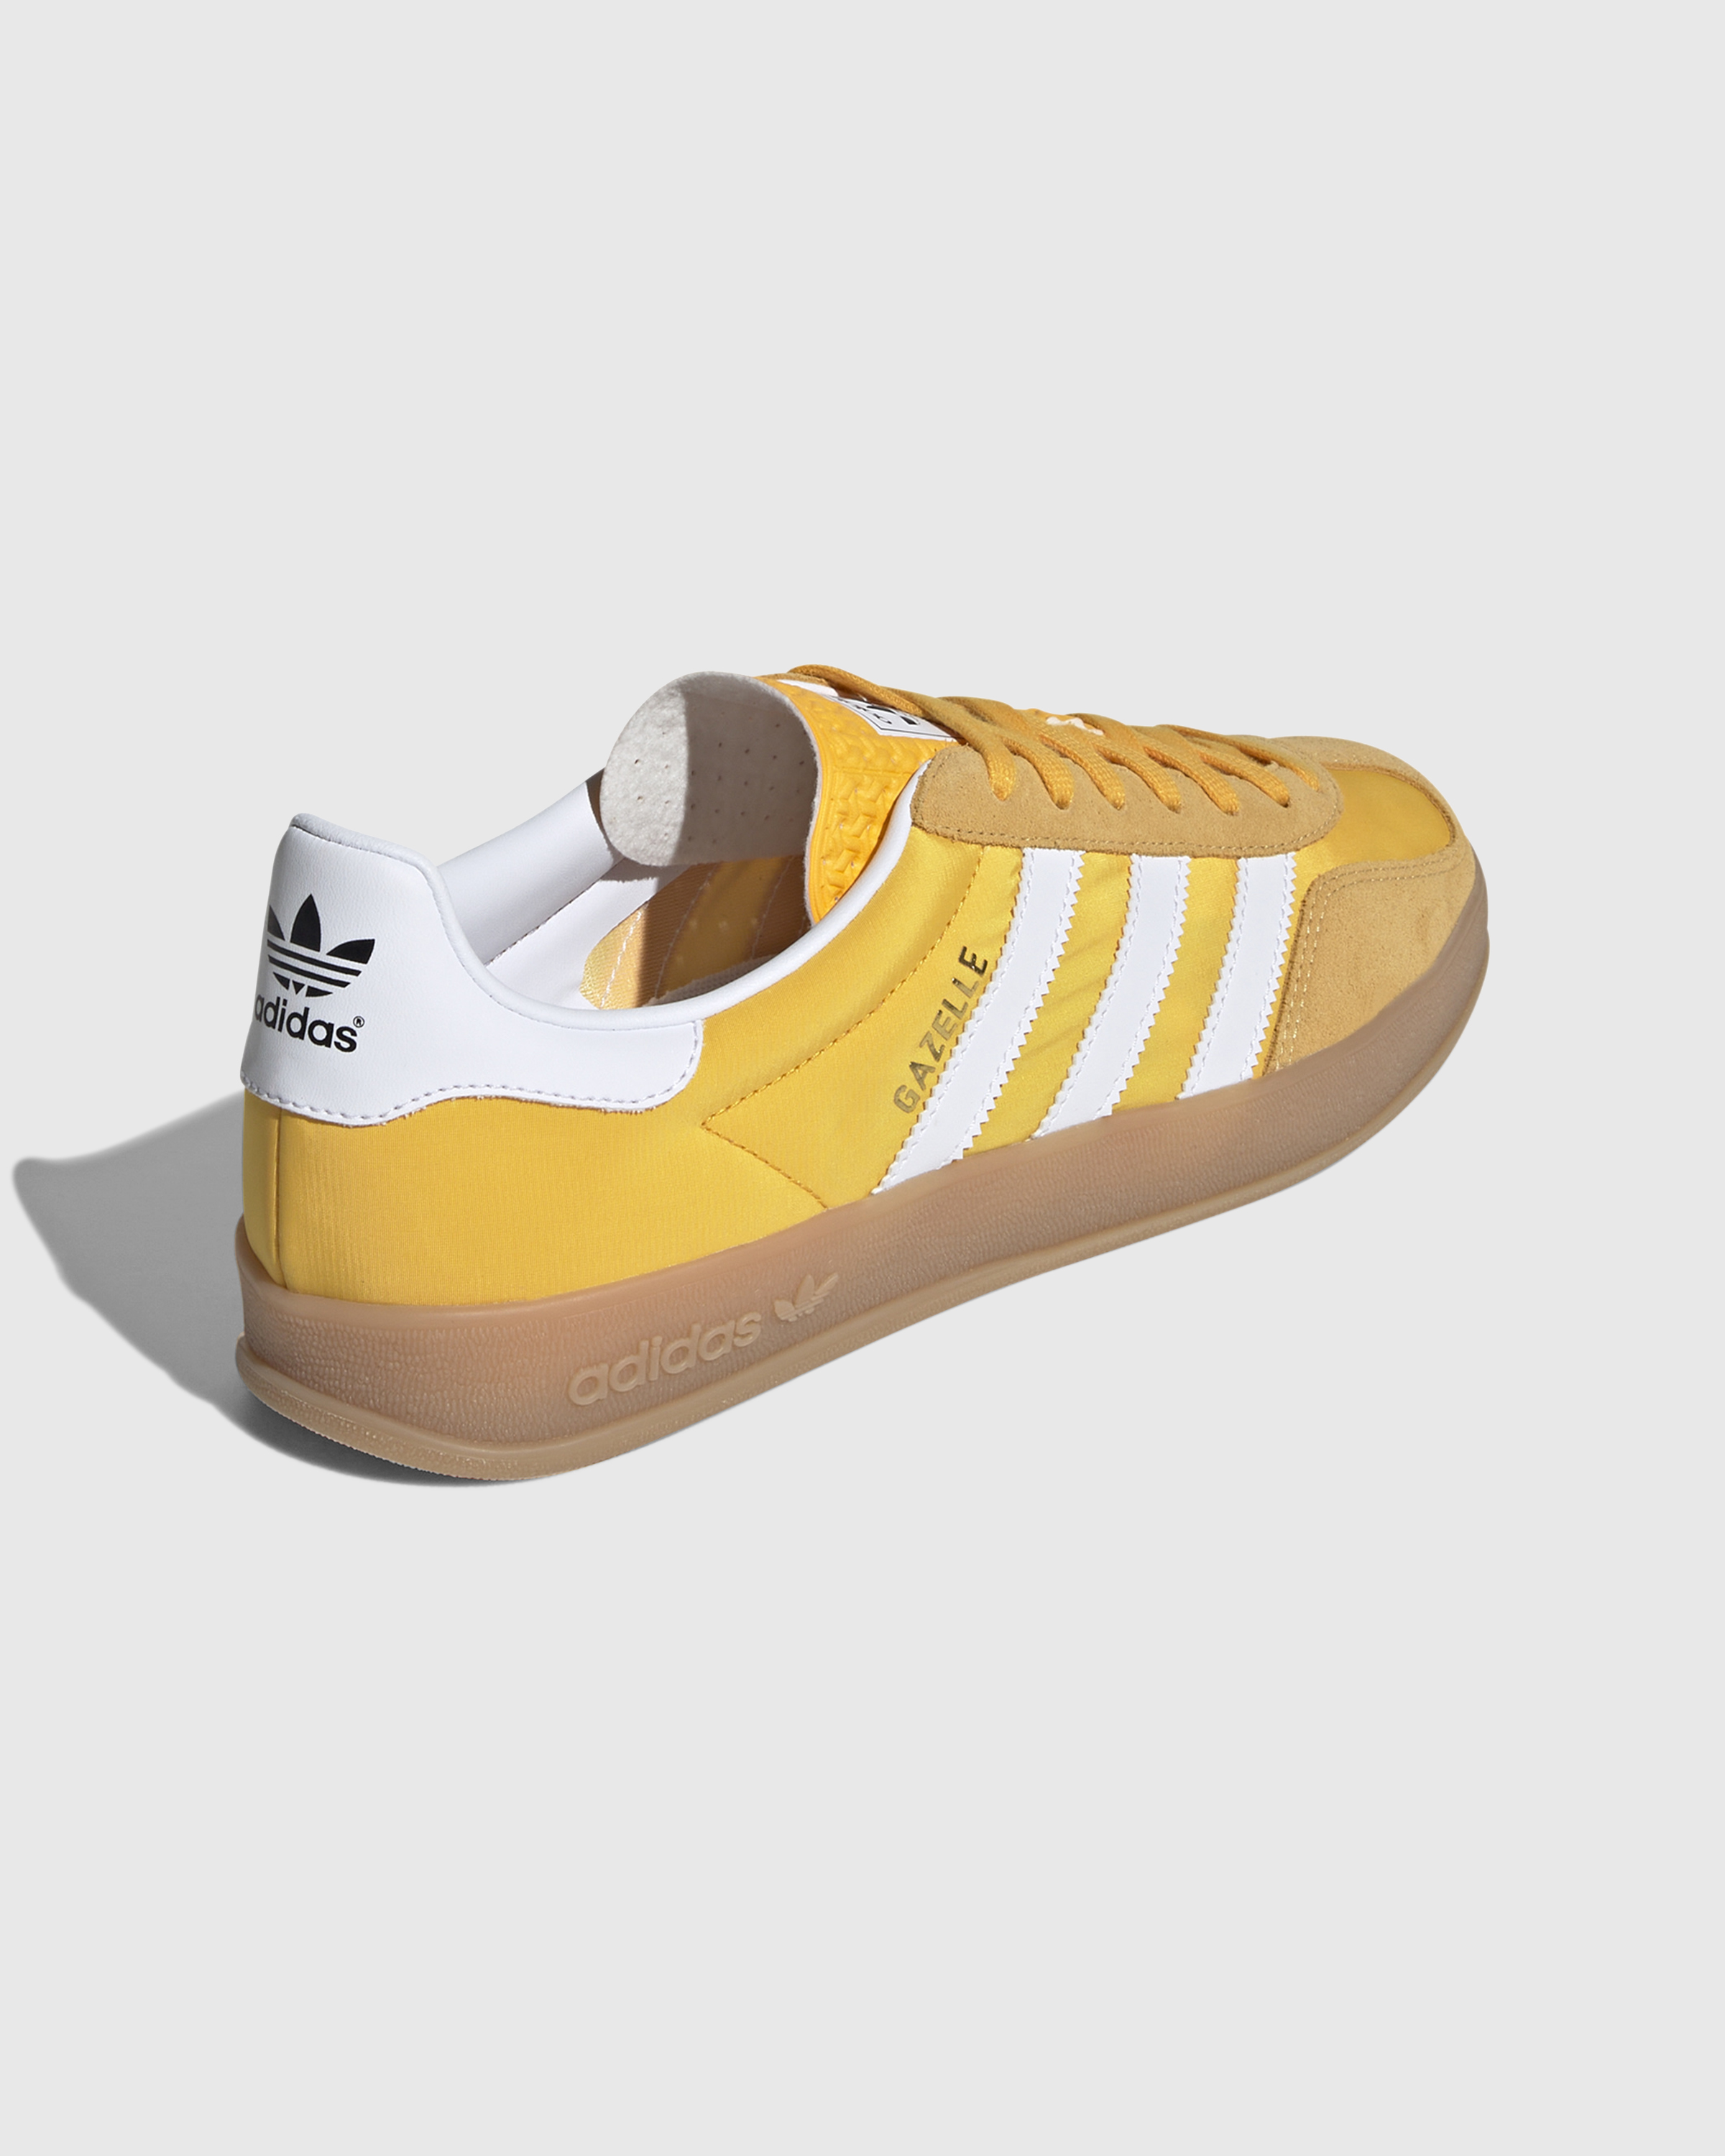 Adidas – Gazelle Indoor Yellow/White - Low Top Sneakers - Yellow - Image 4